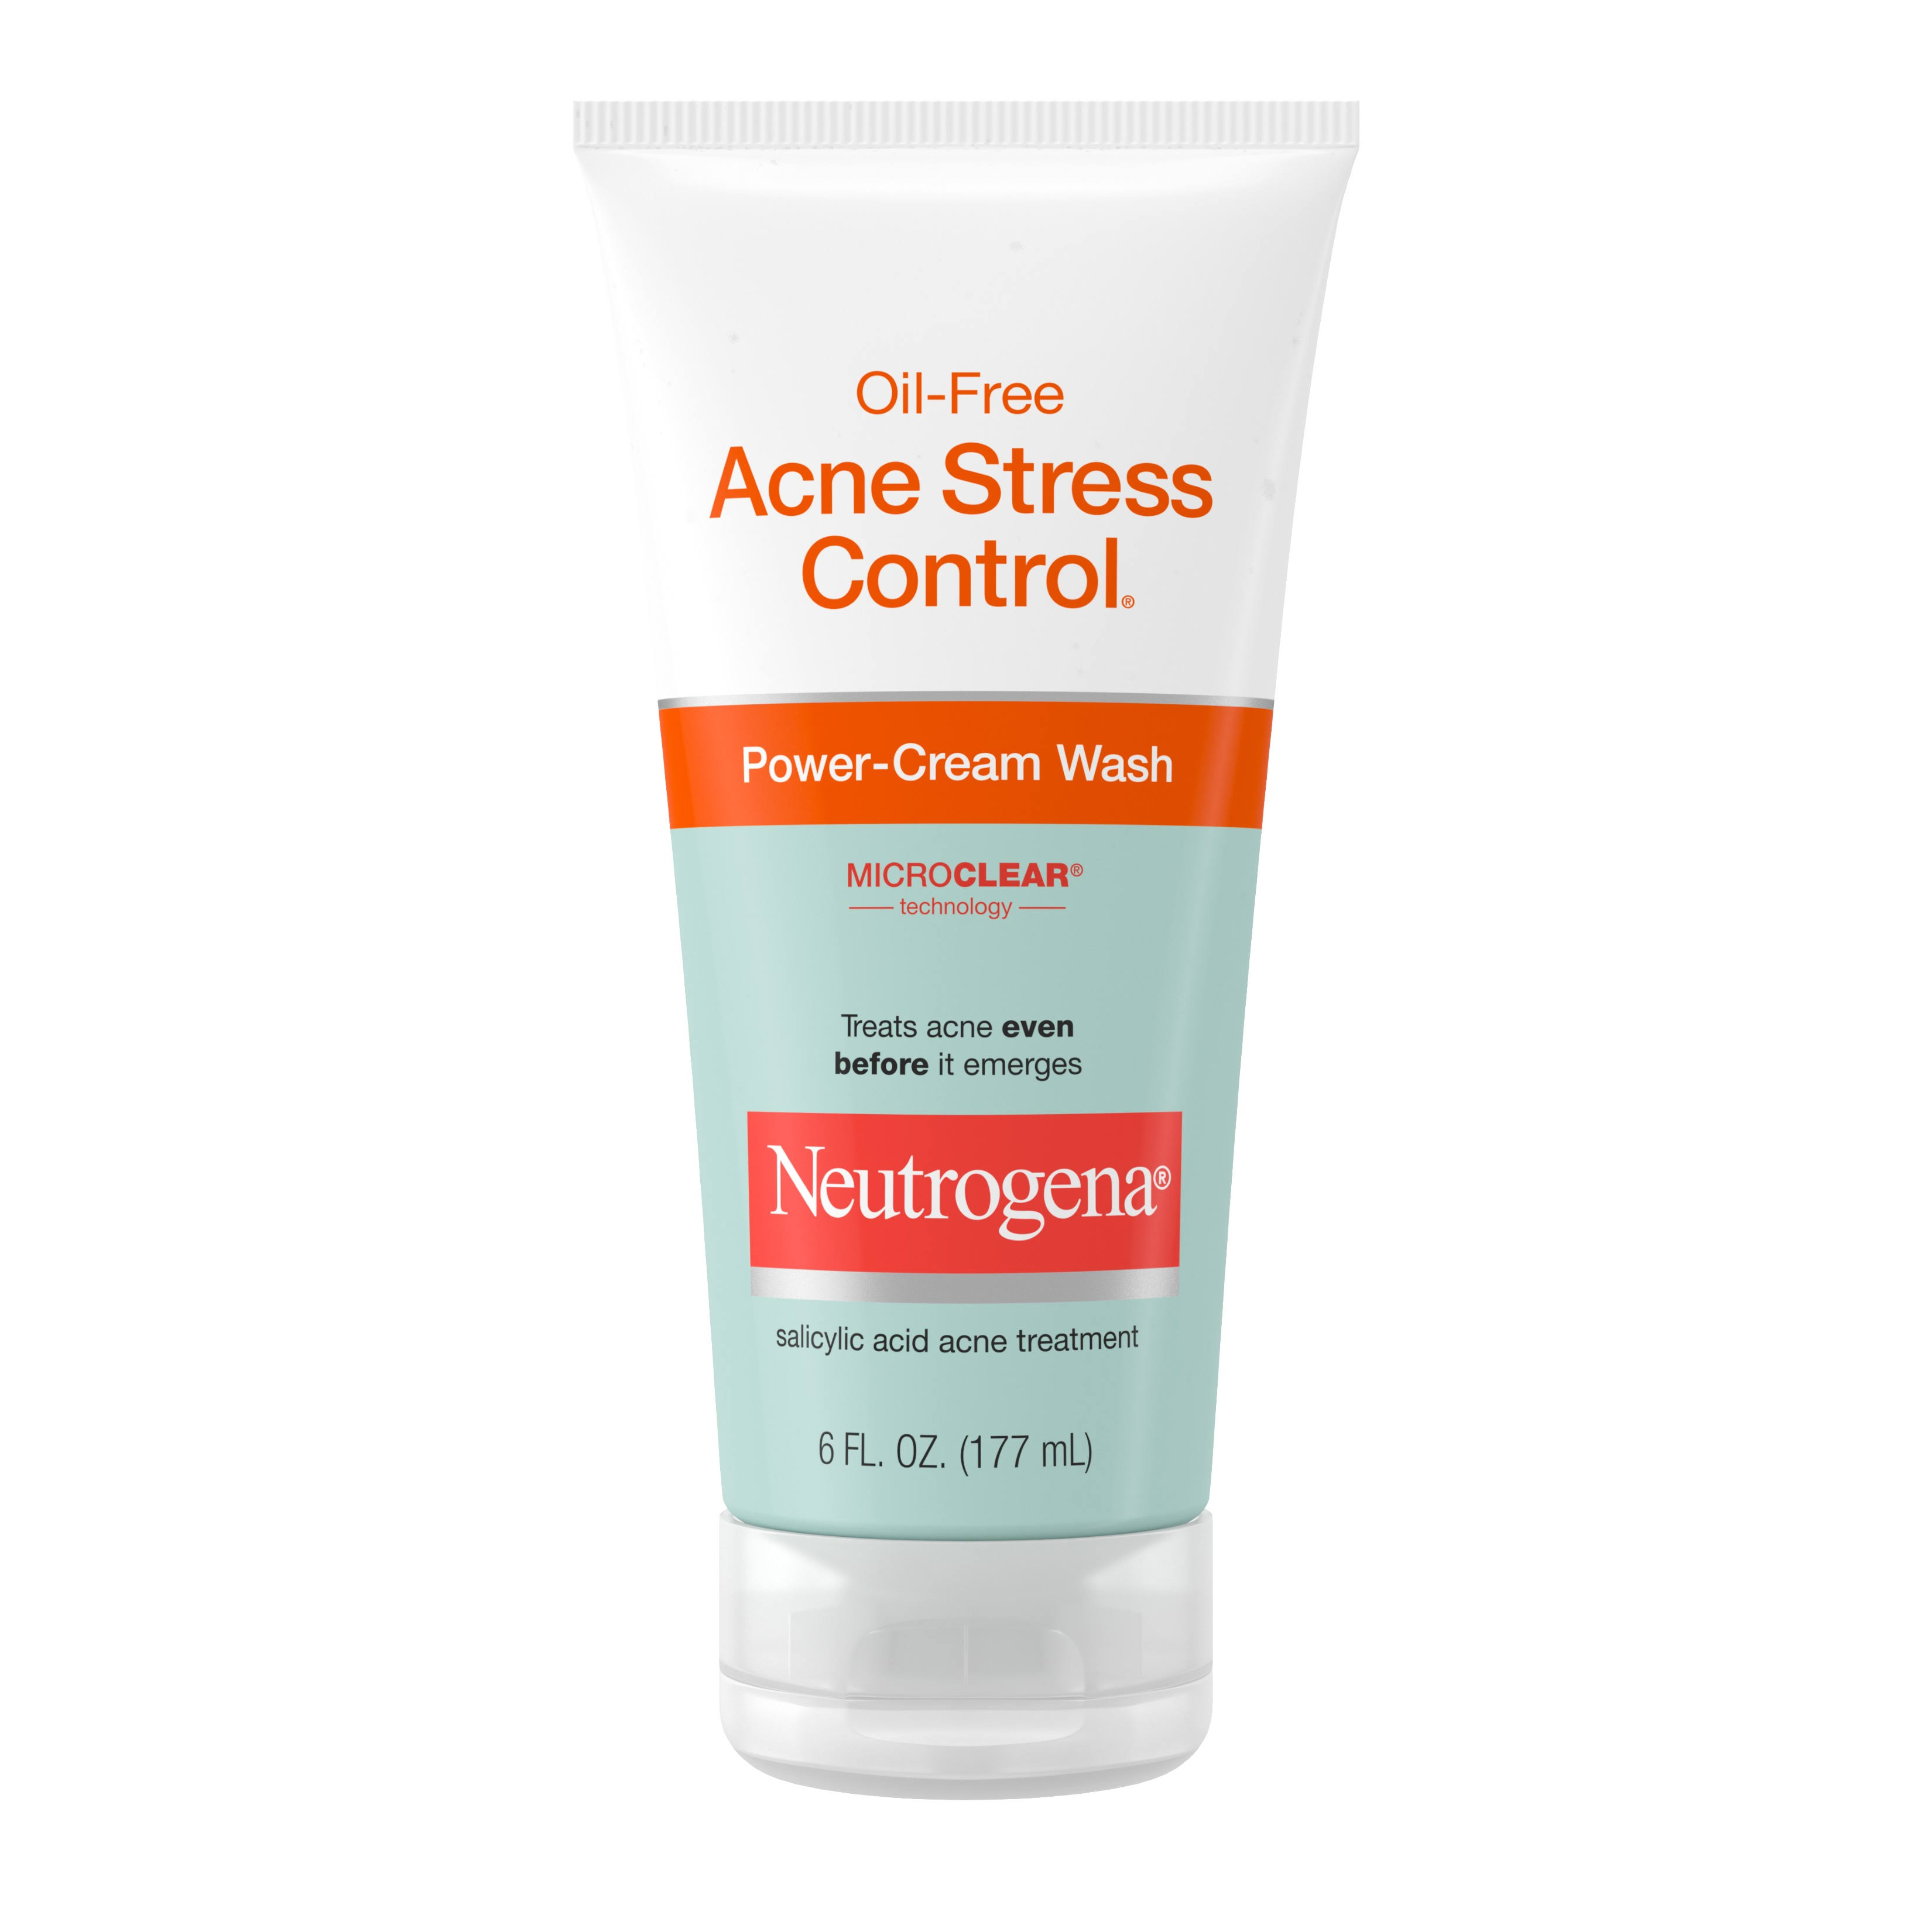 Neutrogena Oil-Free Acne Stress Control Power-Cream Wash - 6oz